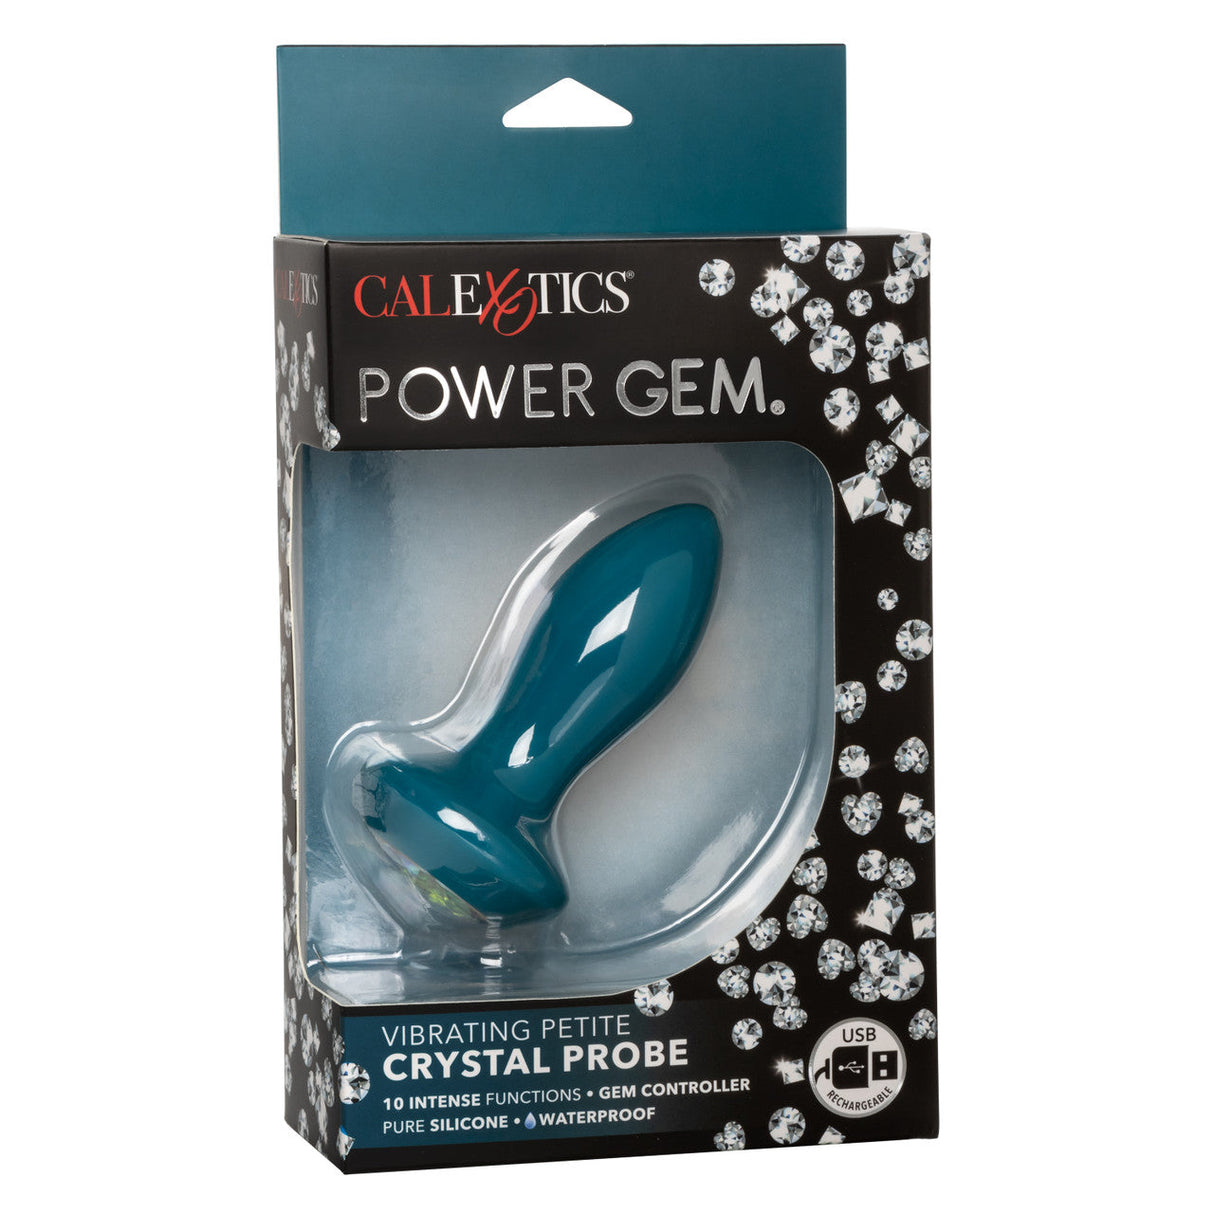 Power Gem Vibrating Petite Crystal Probe